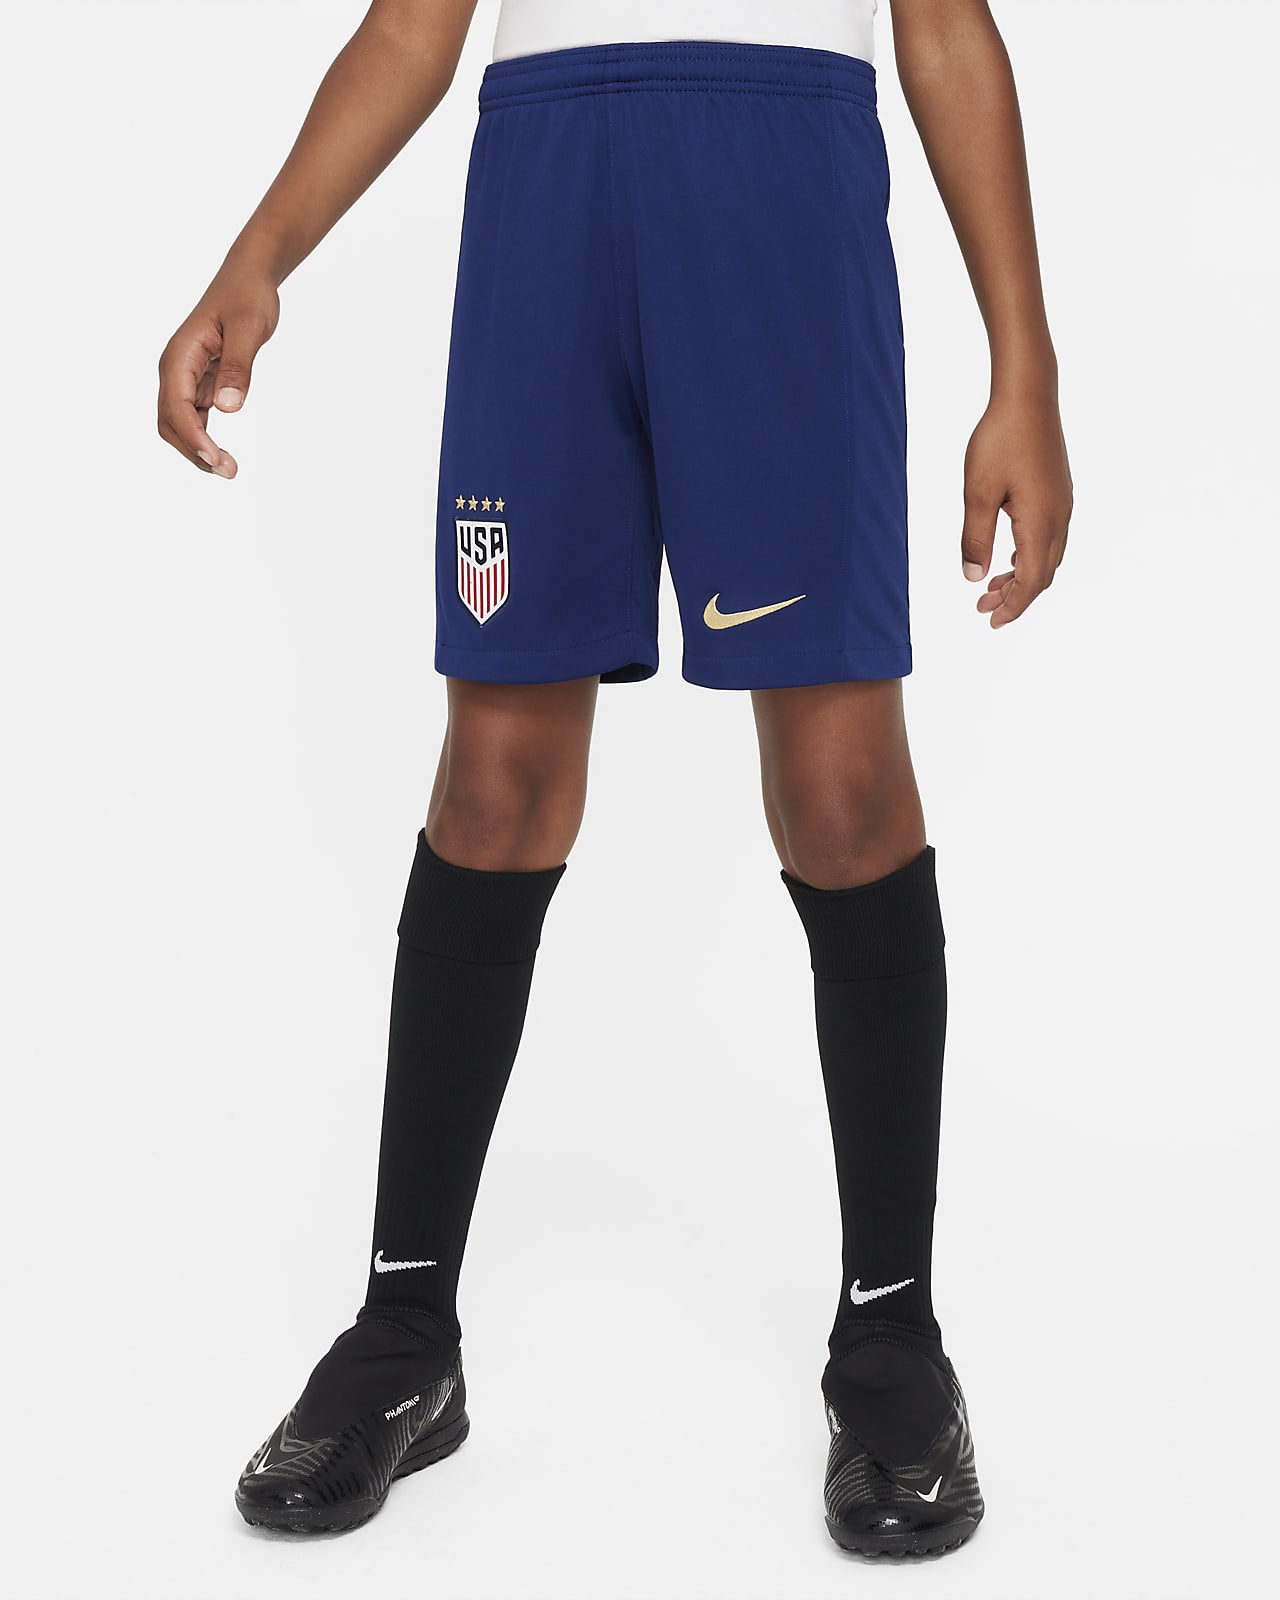 U.S. 2022/23 Stadium Goalkeeper Men's Nike Dri-FIT Soccer Jersey.